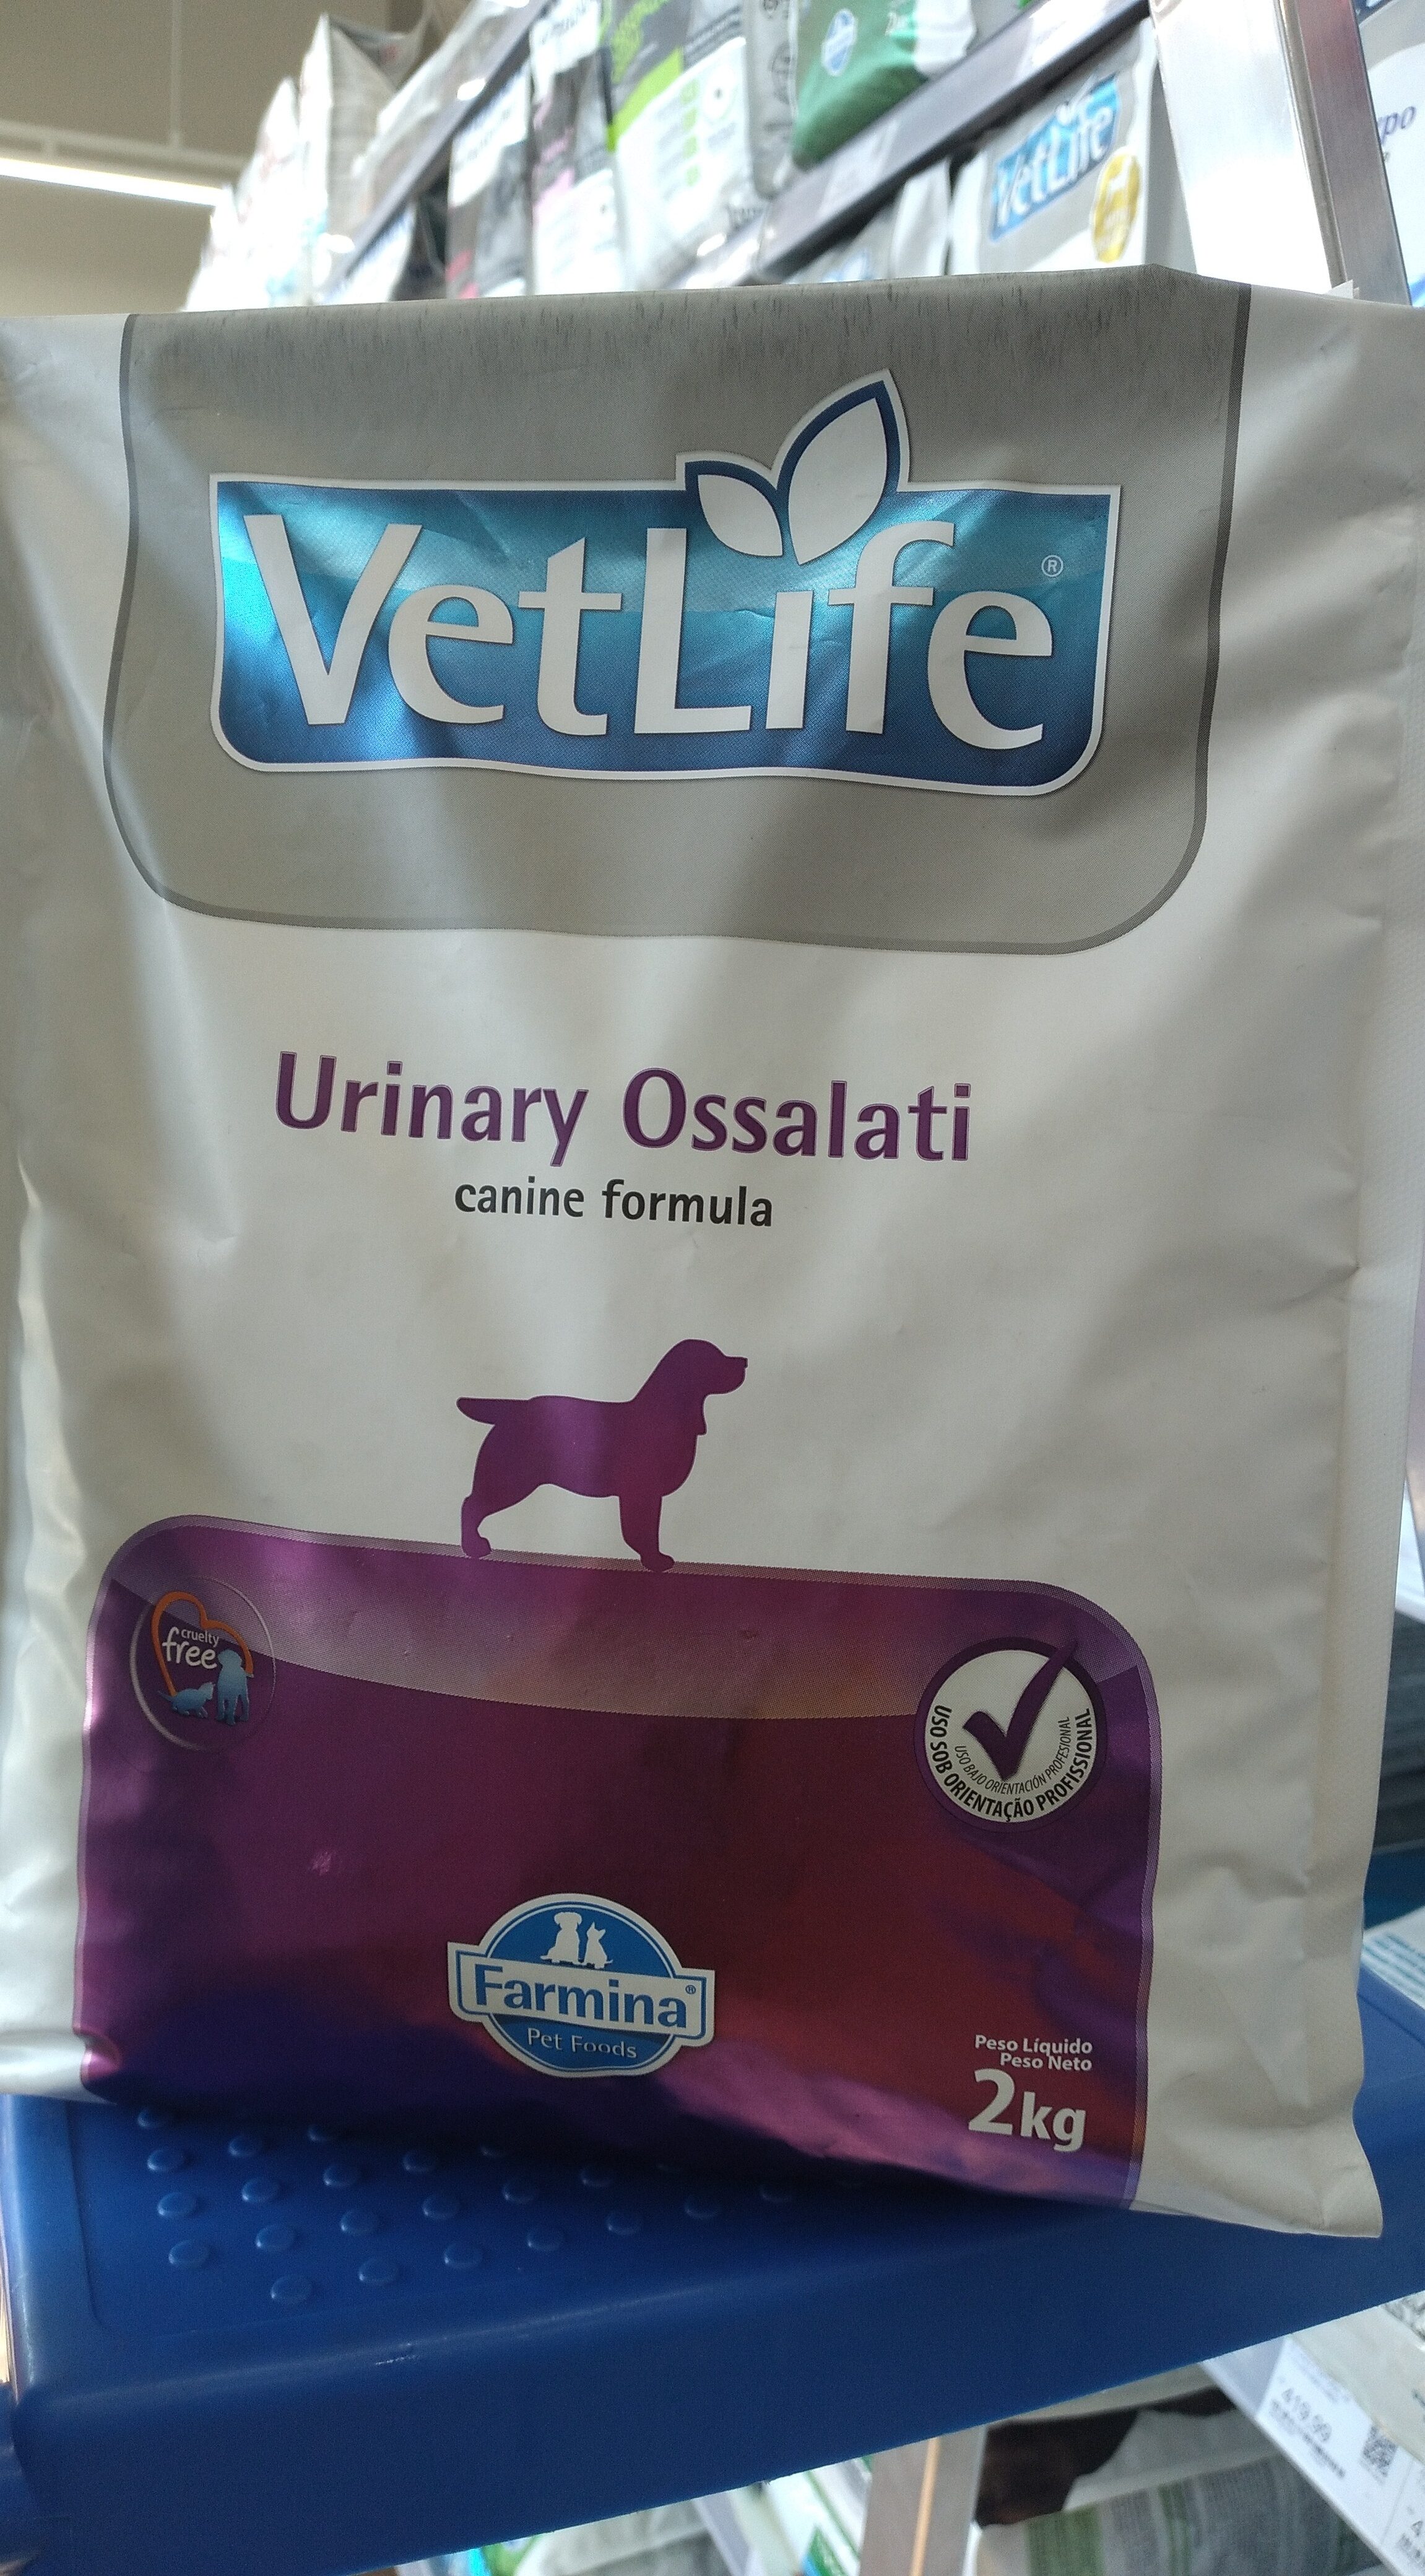 Vet Life Urinary Ossalati 2kg - Product - pt